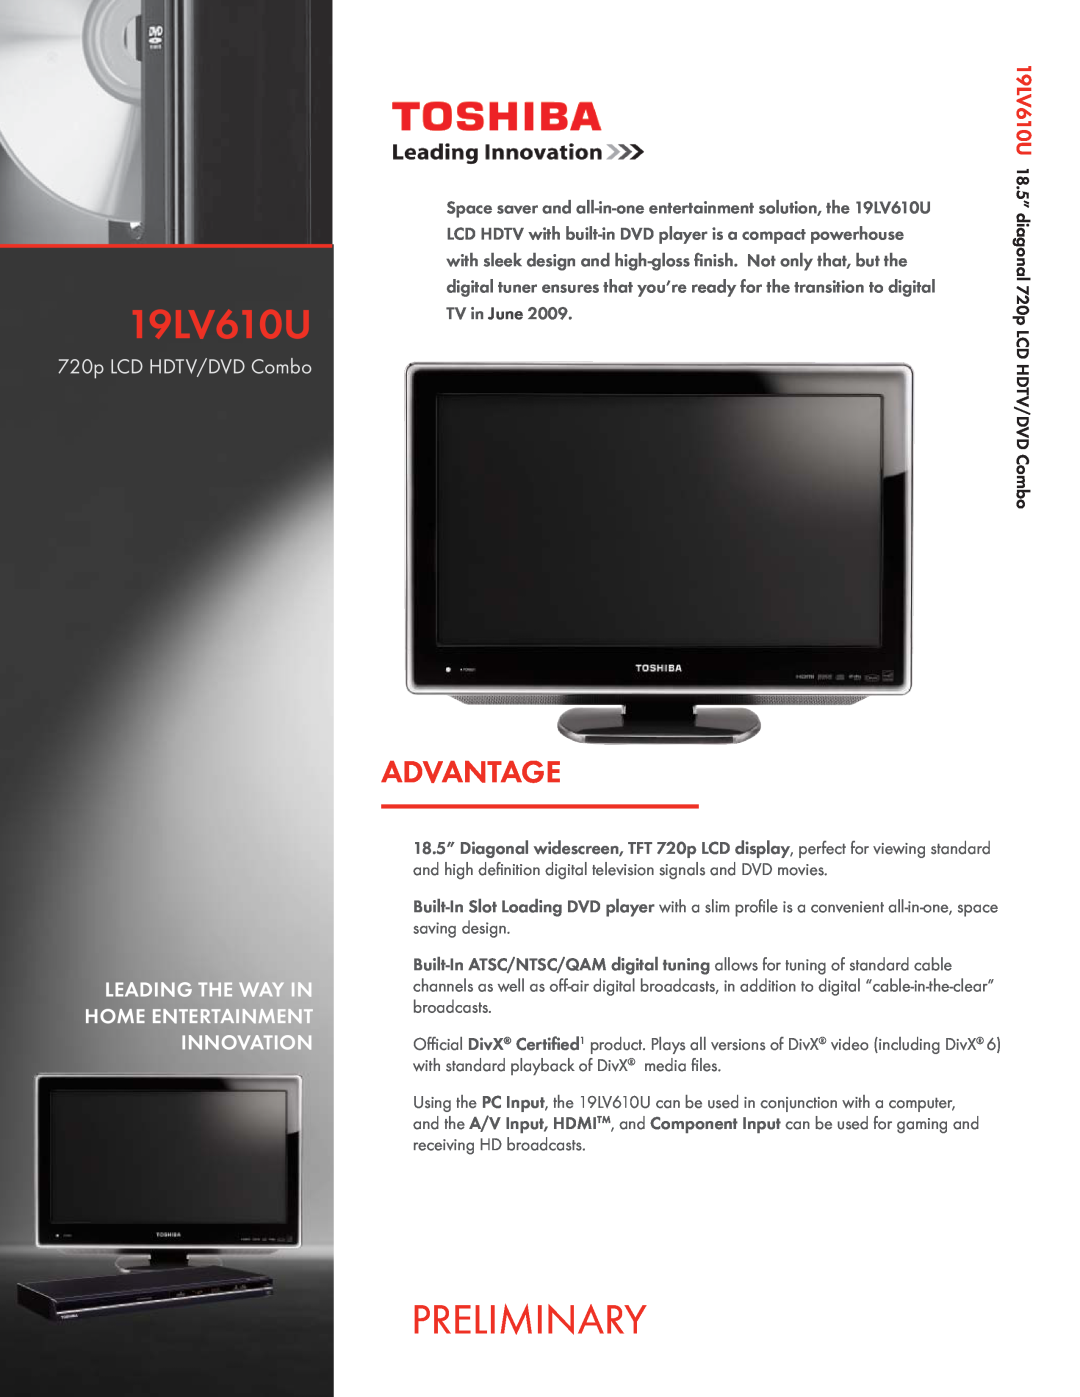 Toshiba manual 720p LCD HDTV/DVD Combo, Preliminary, Advantage, 19LV610U 18.5” 